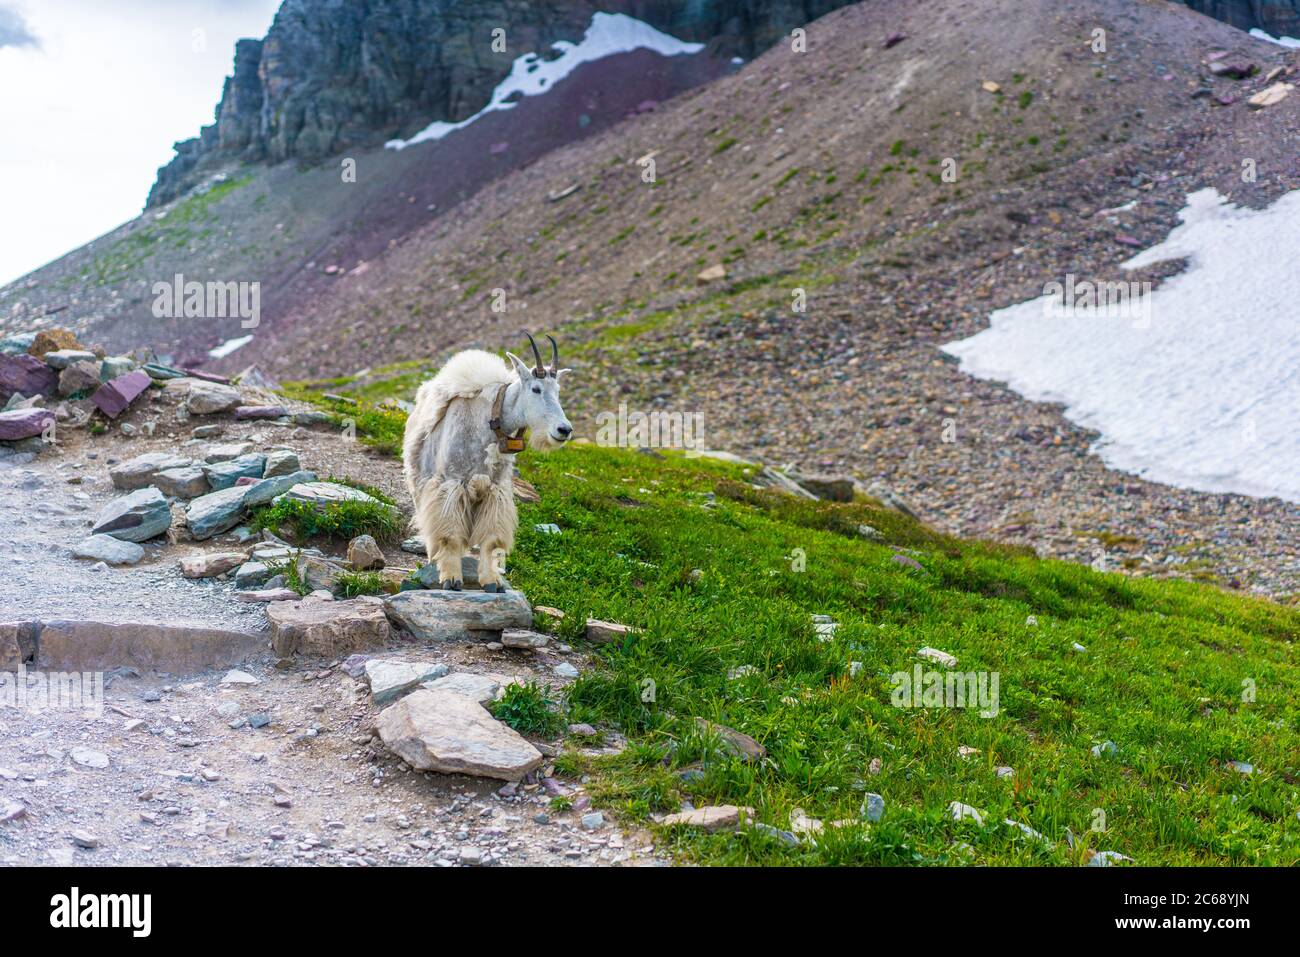 A wild mountain goat in Glacier National Park, Montana. Stock Photo